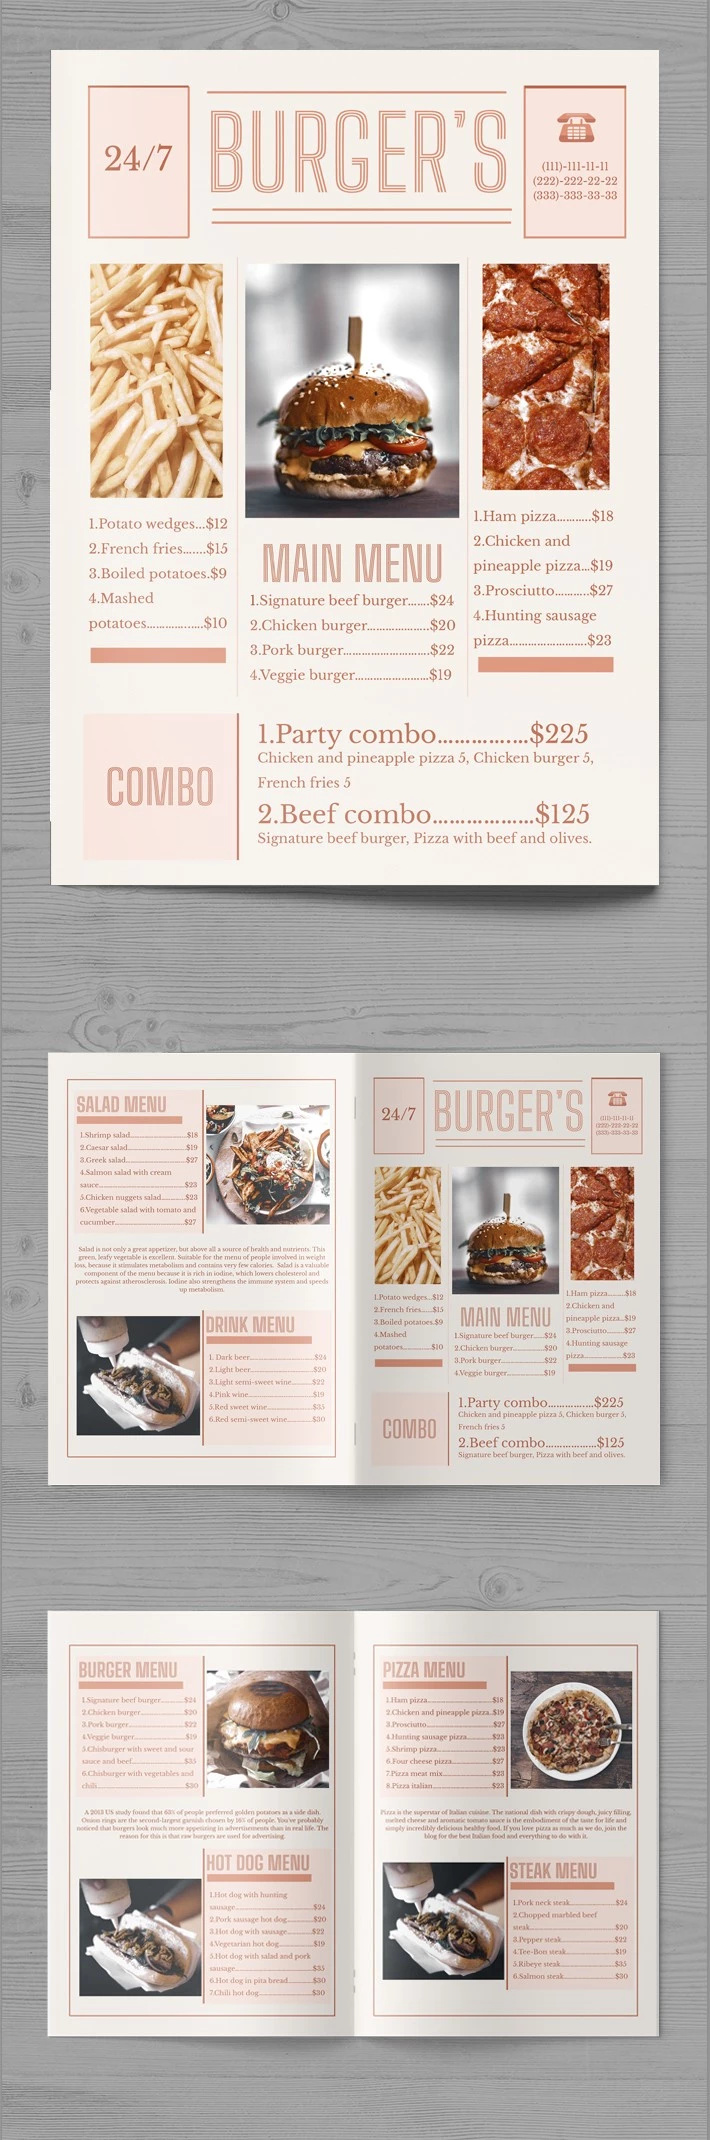 Burger's Menu Newspaper - free Google Docs Template - 10061876